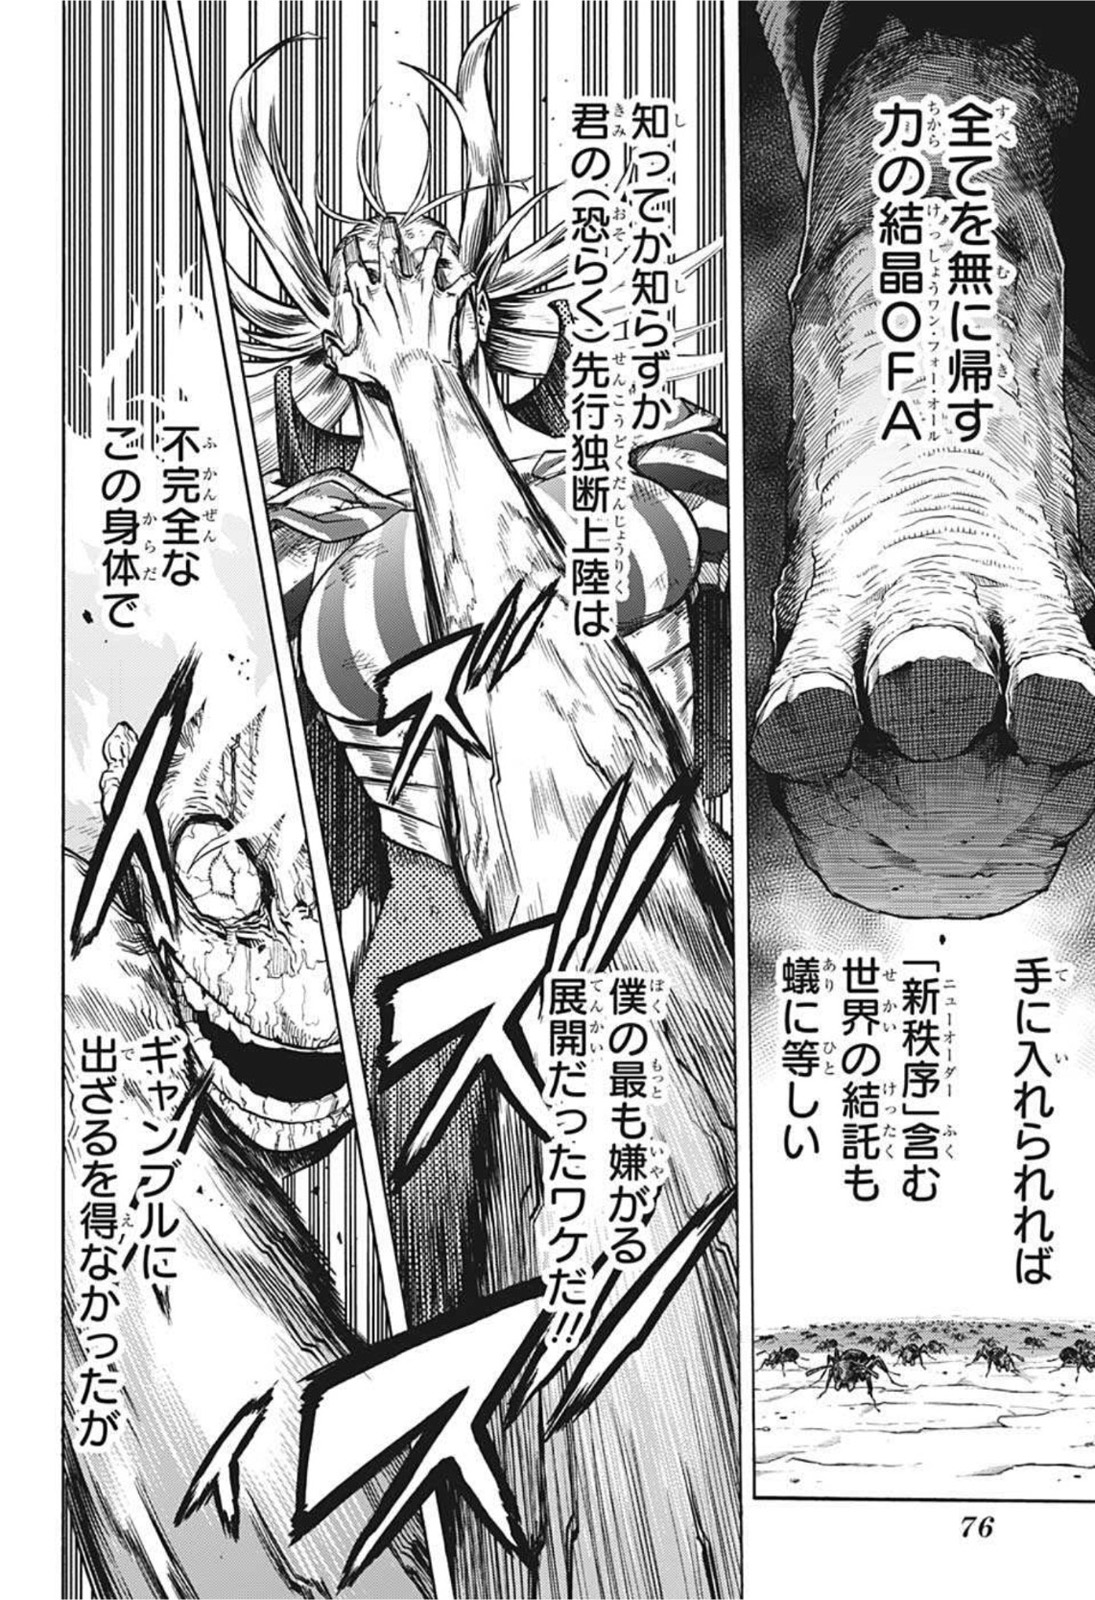 Boku no Hero Academia - Chapter 333 - Page 2